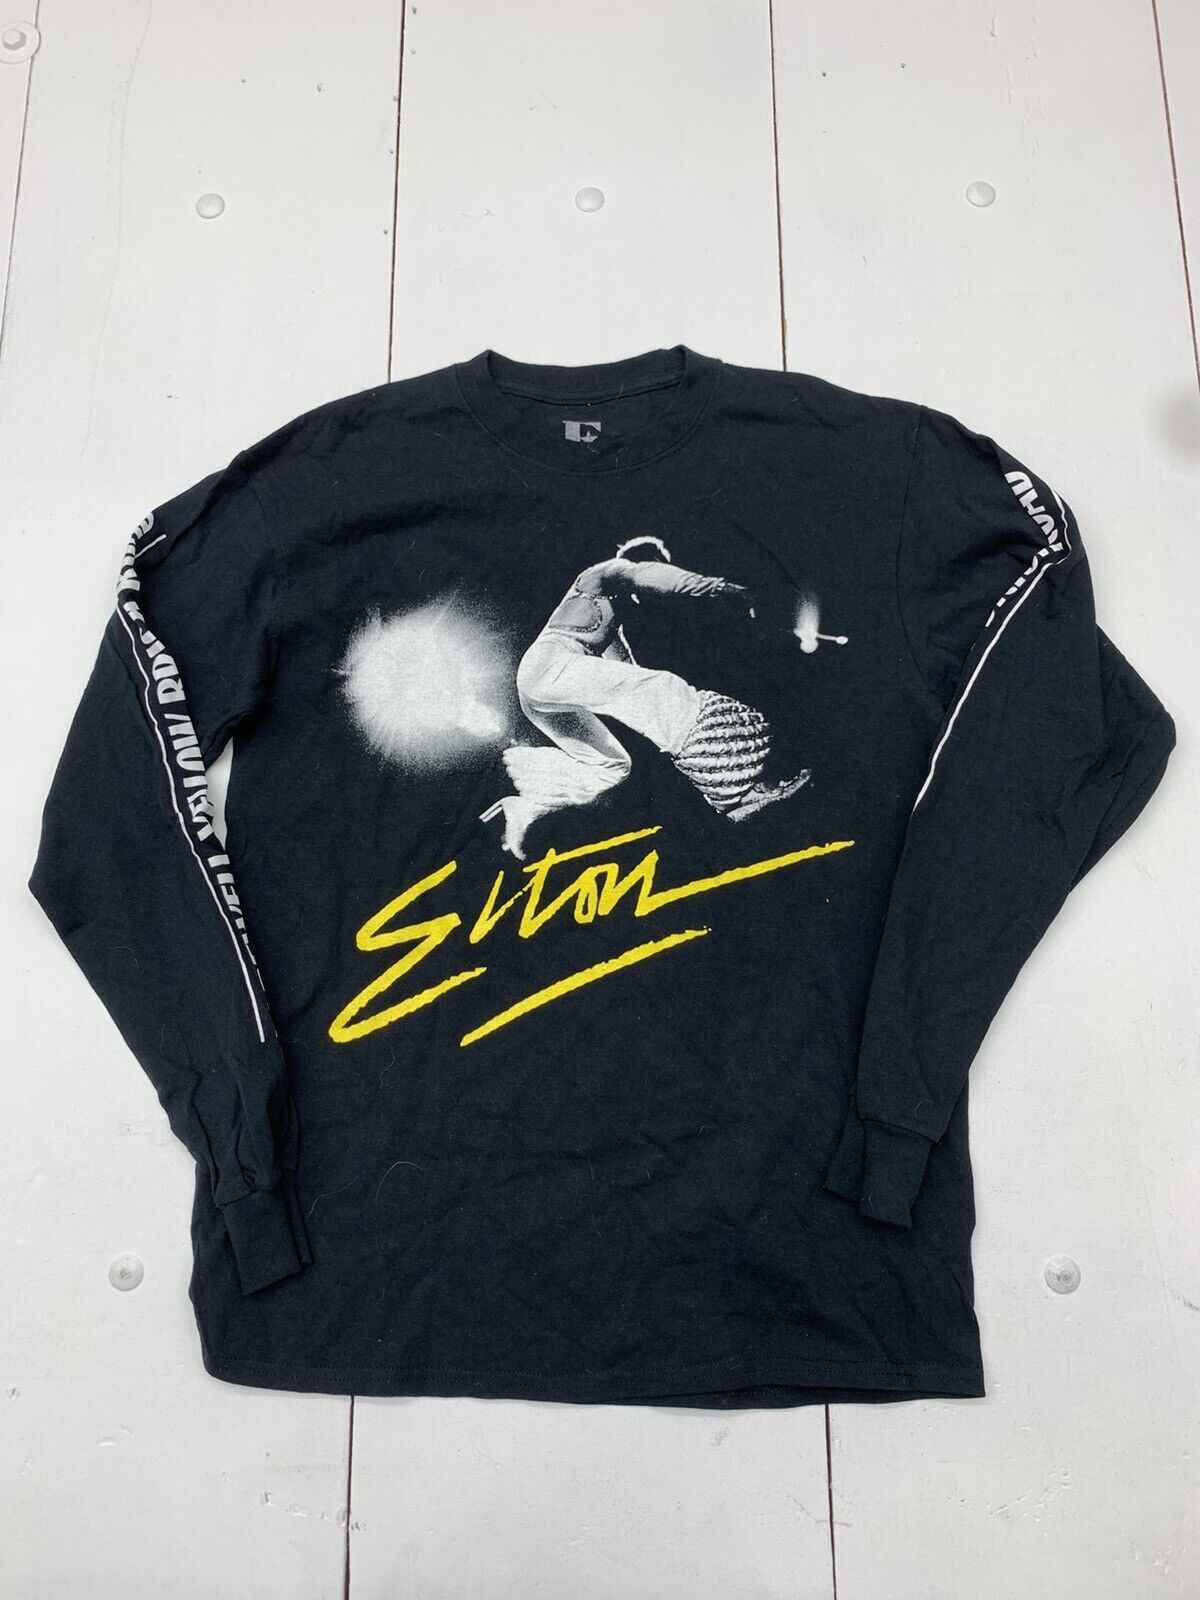 Elton John Mens Black Graphic Long Sleeve Shirt Size Medium